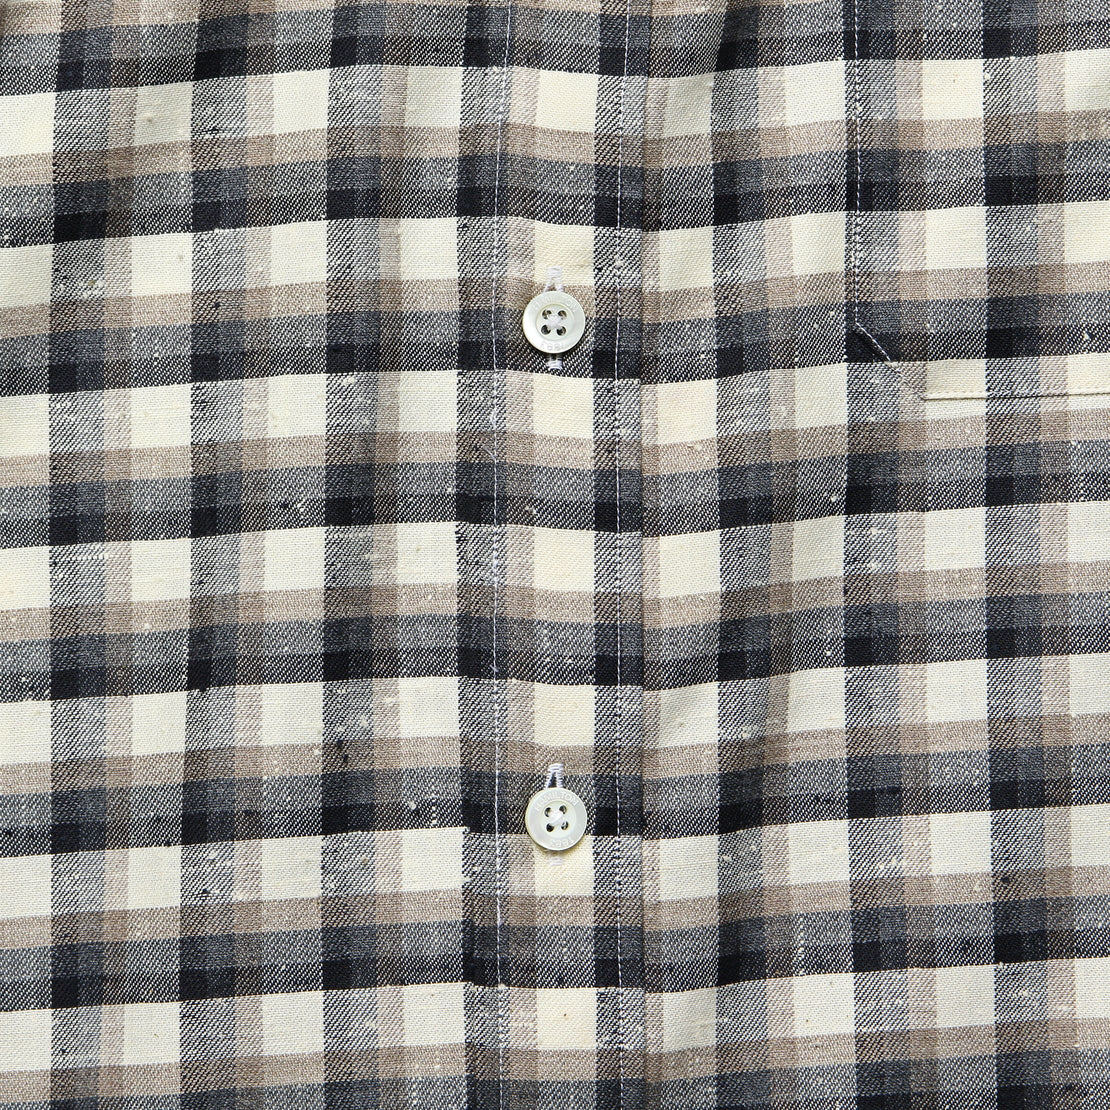 Twill Plaid Shirt - Brown/Cream - Hamilton Shirt Co. - STAG Provisions - Tops - L/S Woven - Plaid